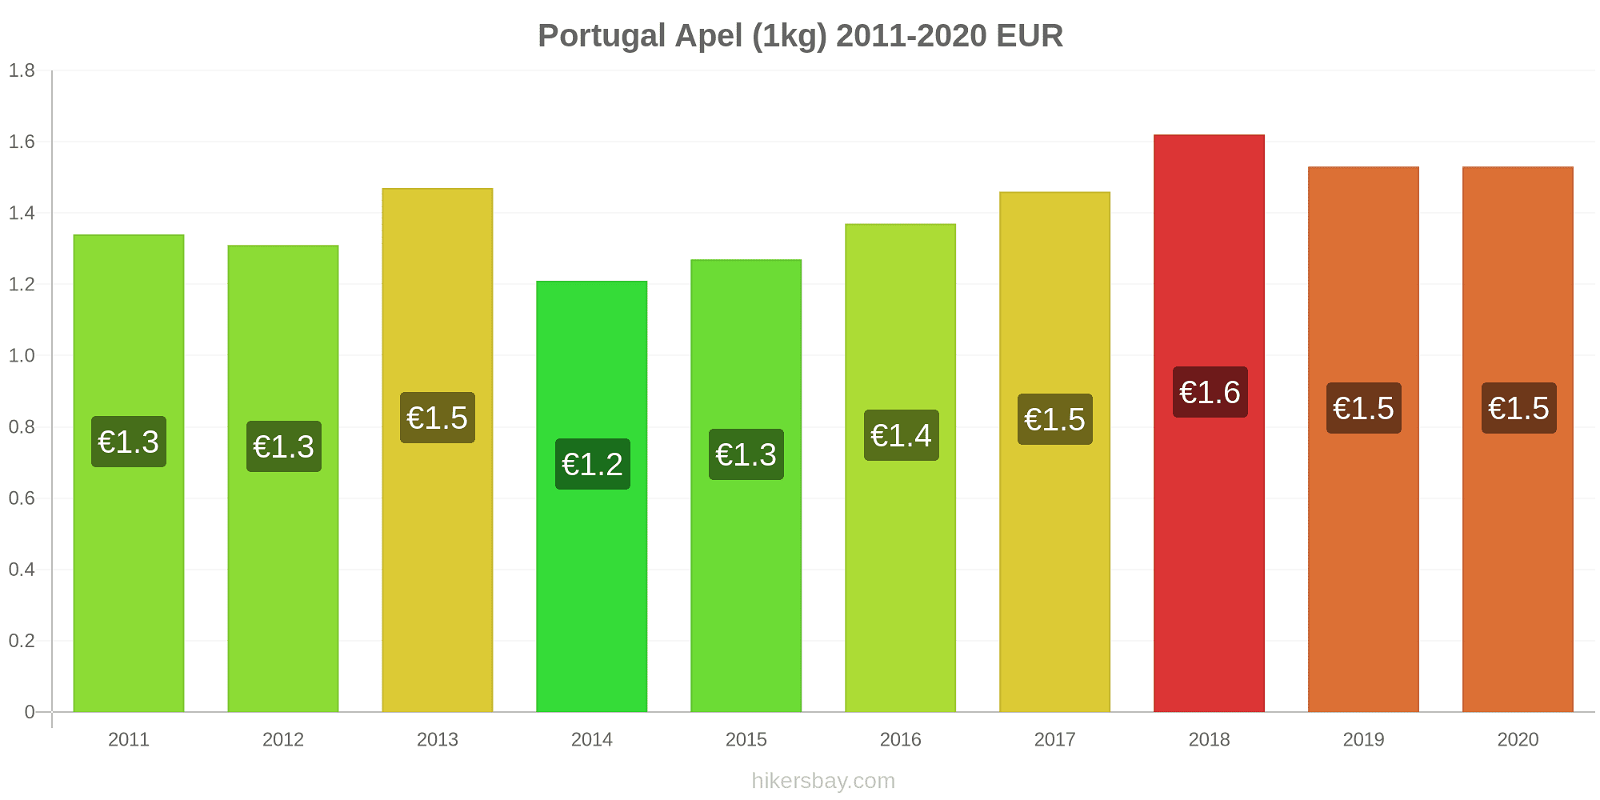 Portugal perubahan harga Apel (1kg) hikersbay.com